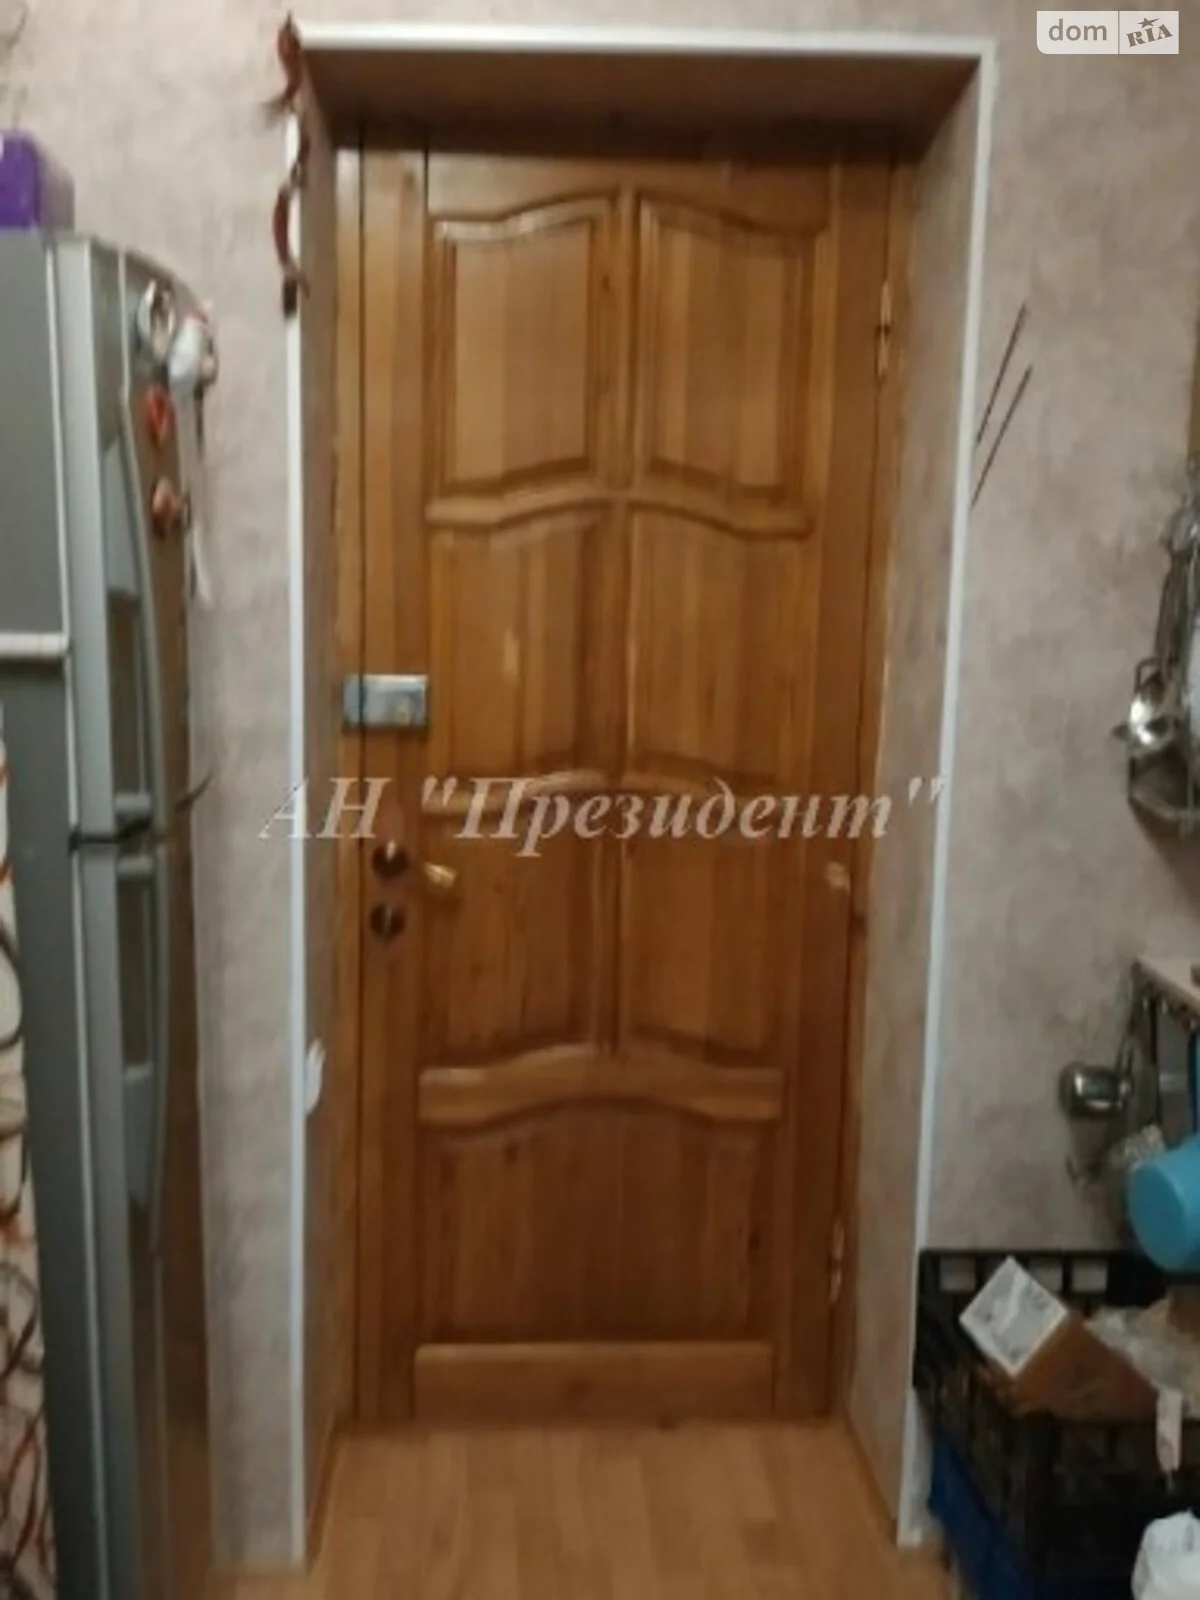 Продается комната 17.5 кв. м в Одессе, цена: 12000 $ - фото 1